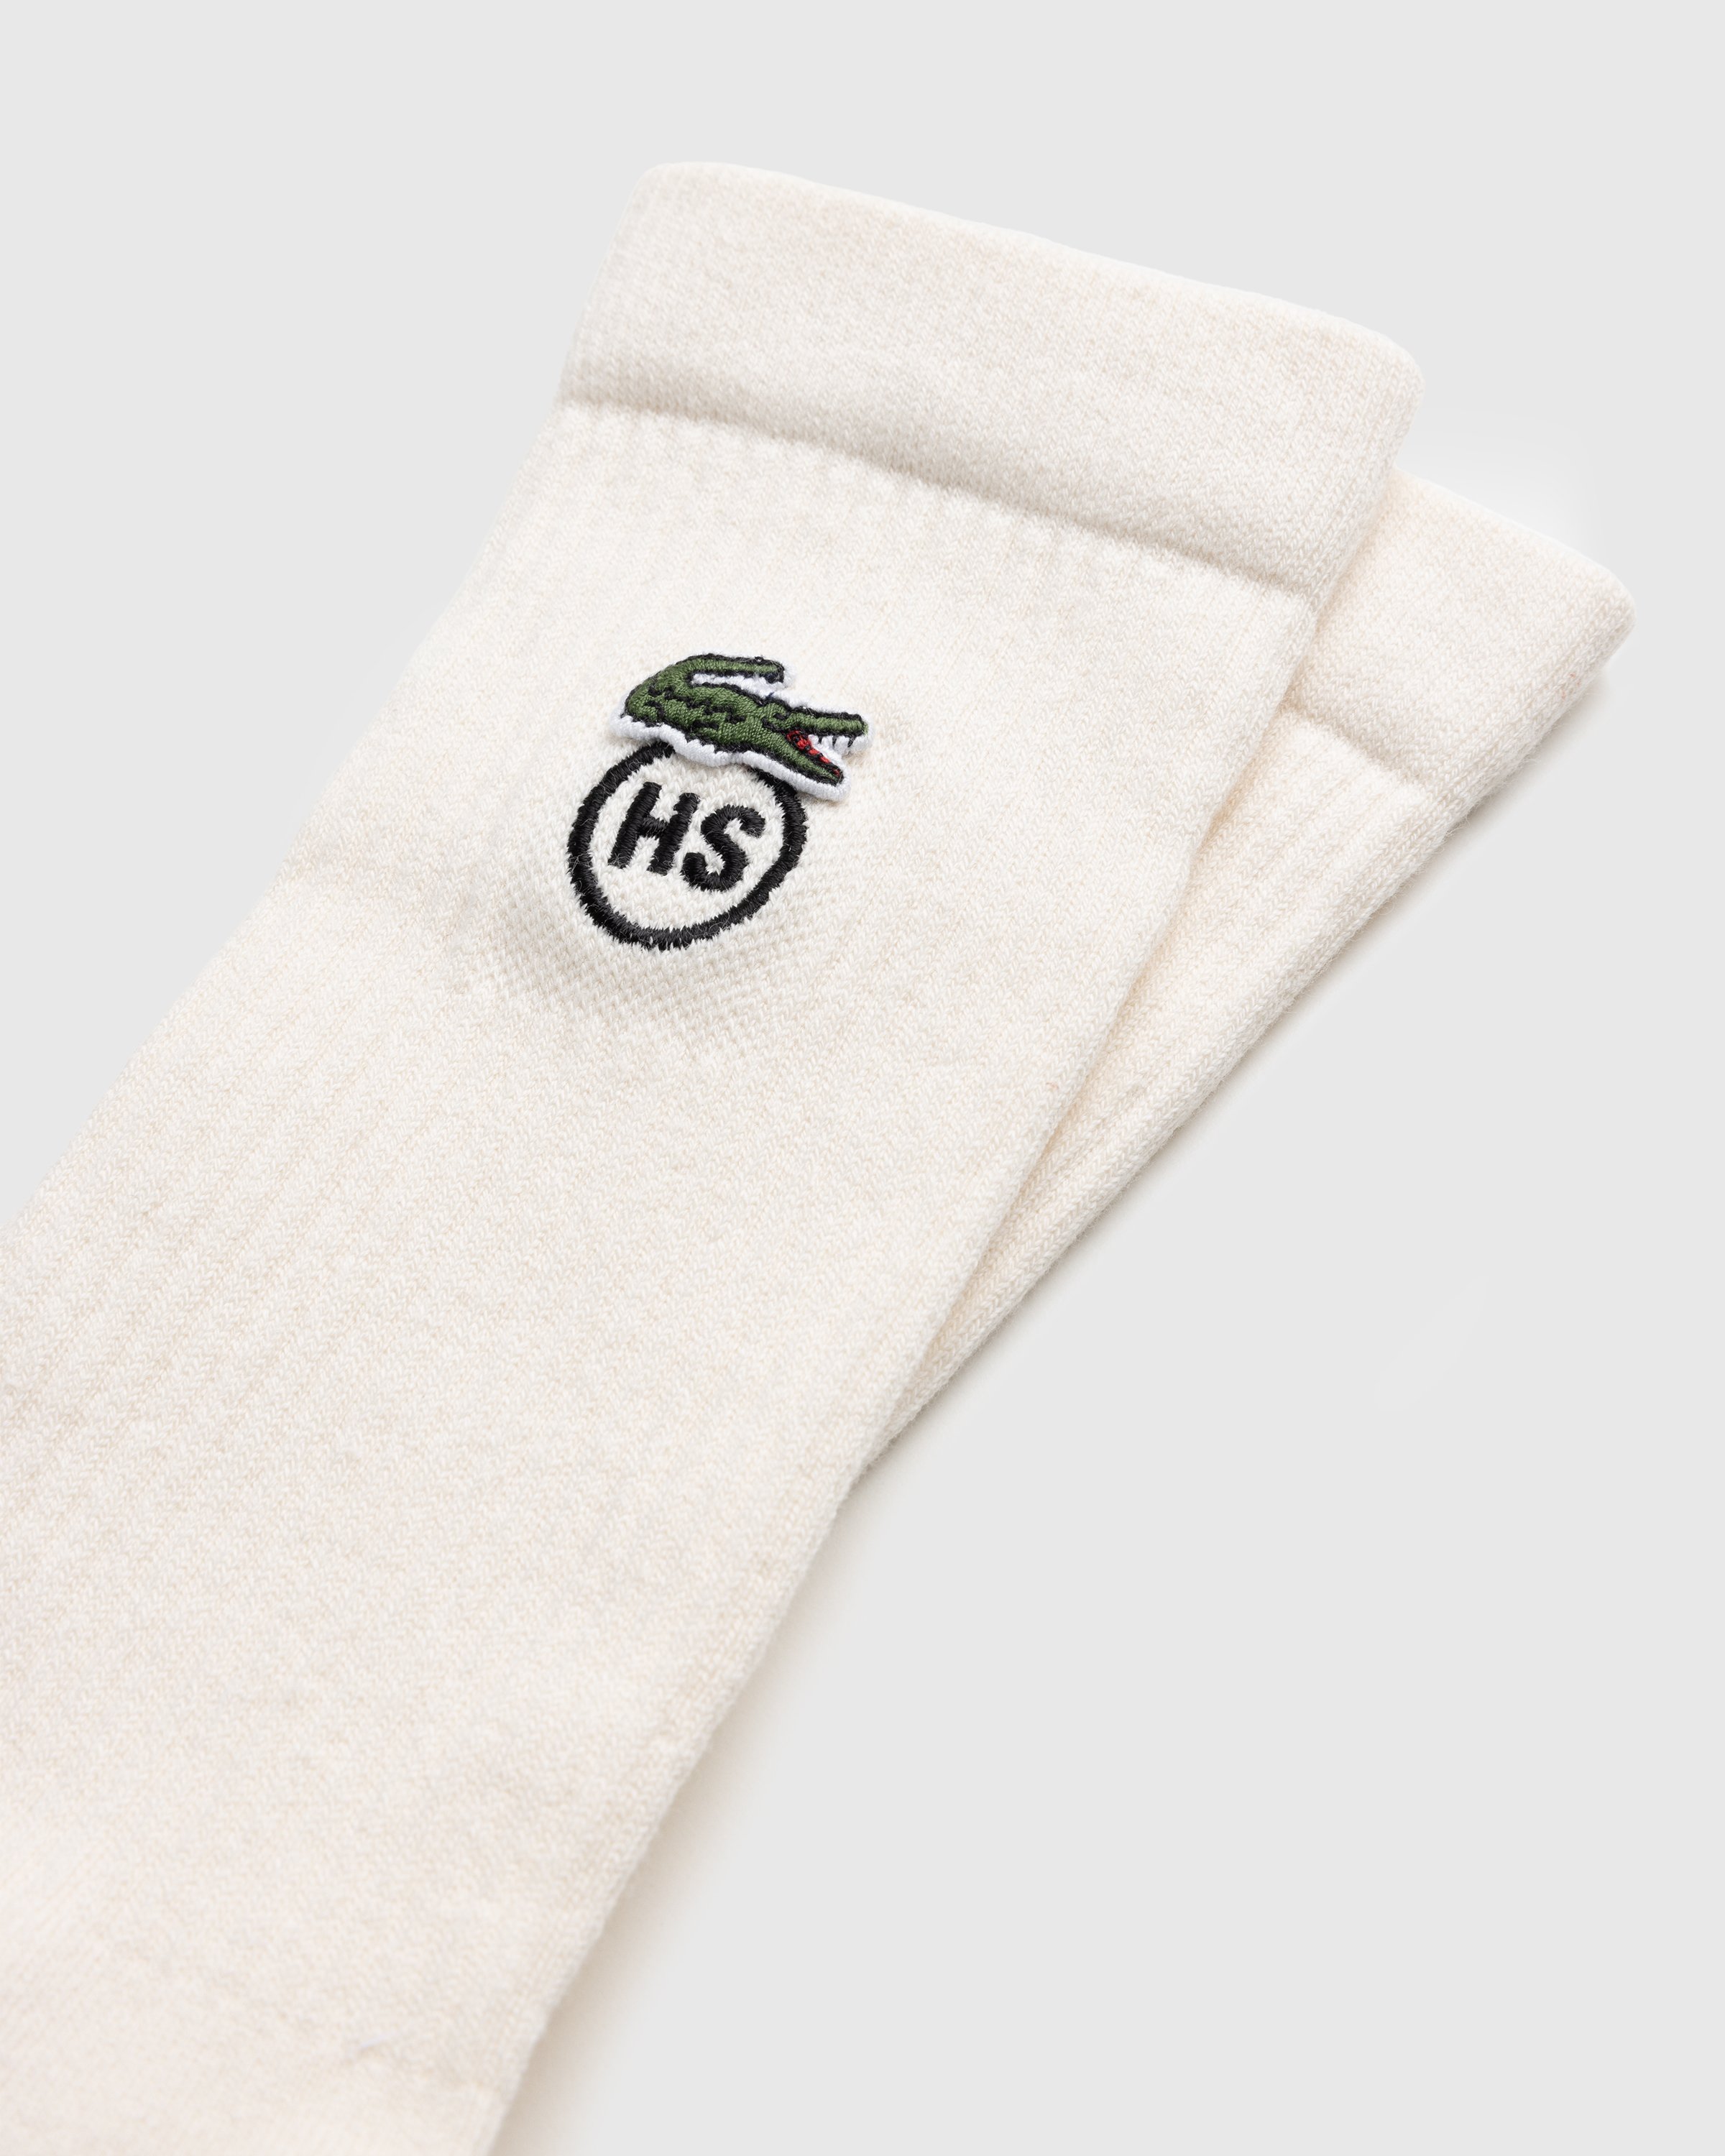 Lacoste x Highsnobiety - Eggshell Socks - Accessories - Eggshell - Image 3